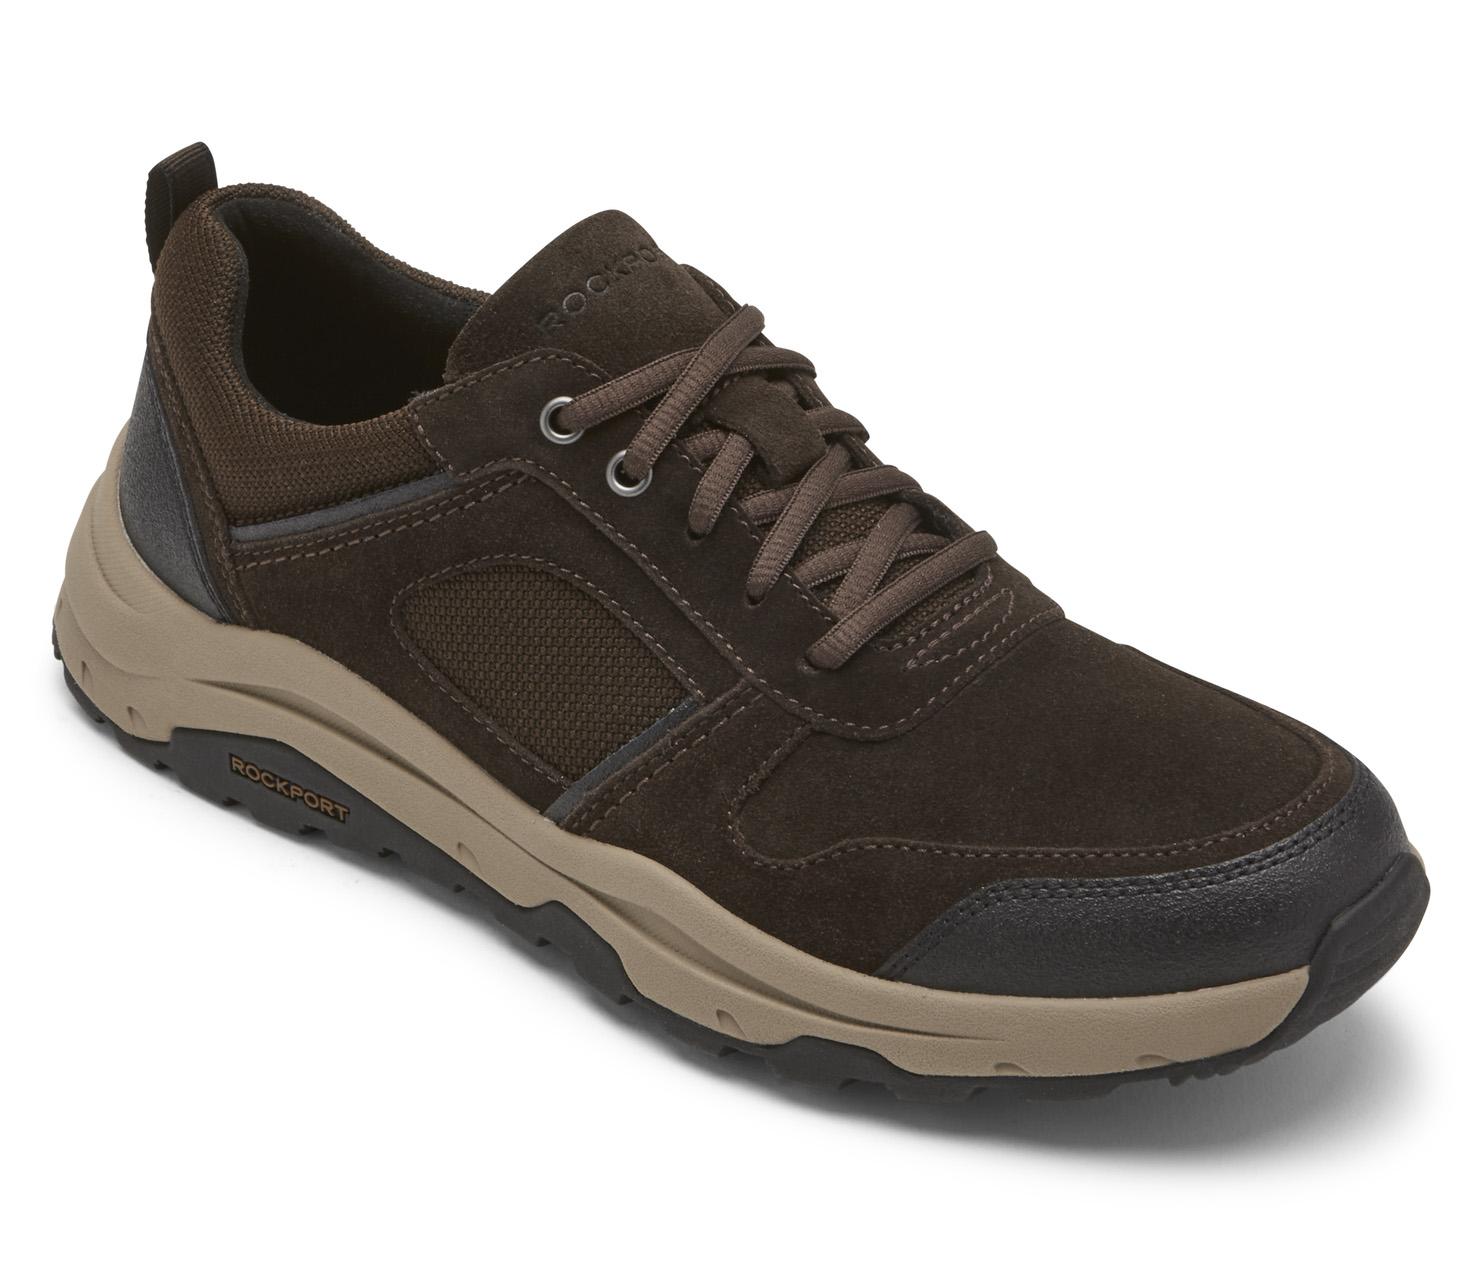 Rockport XCS Birchfield Ubal Trekker Shoes for $39.99 Shipped